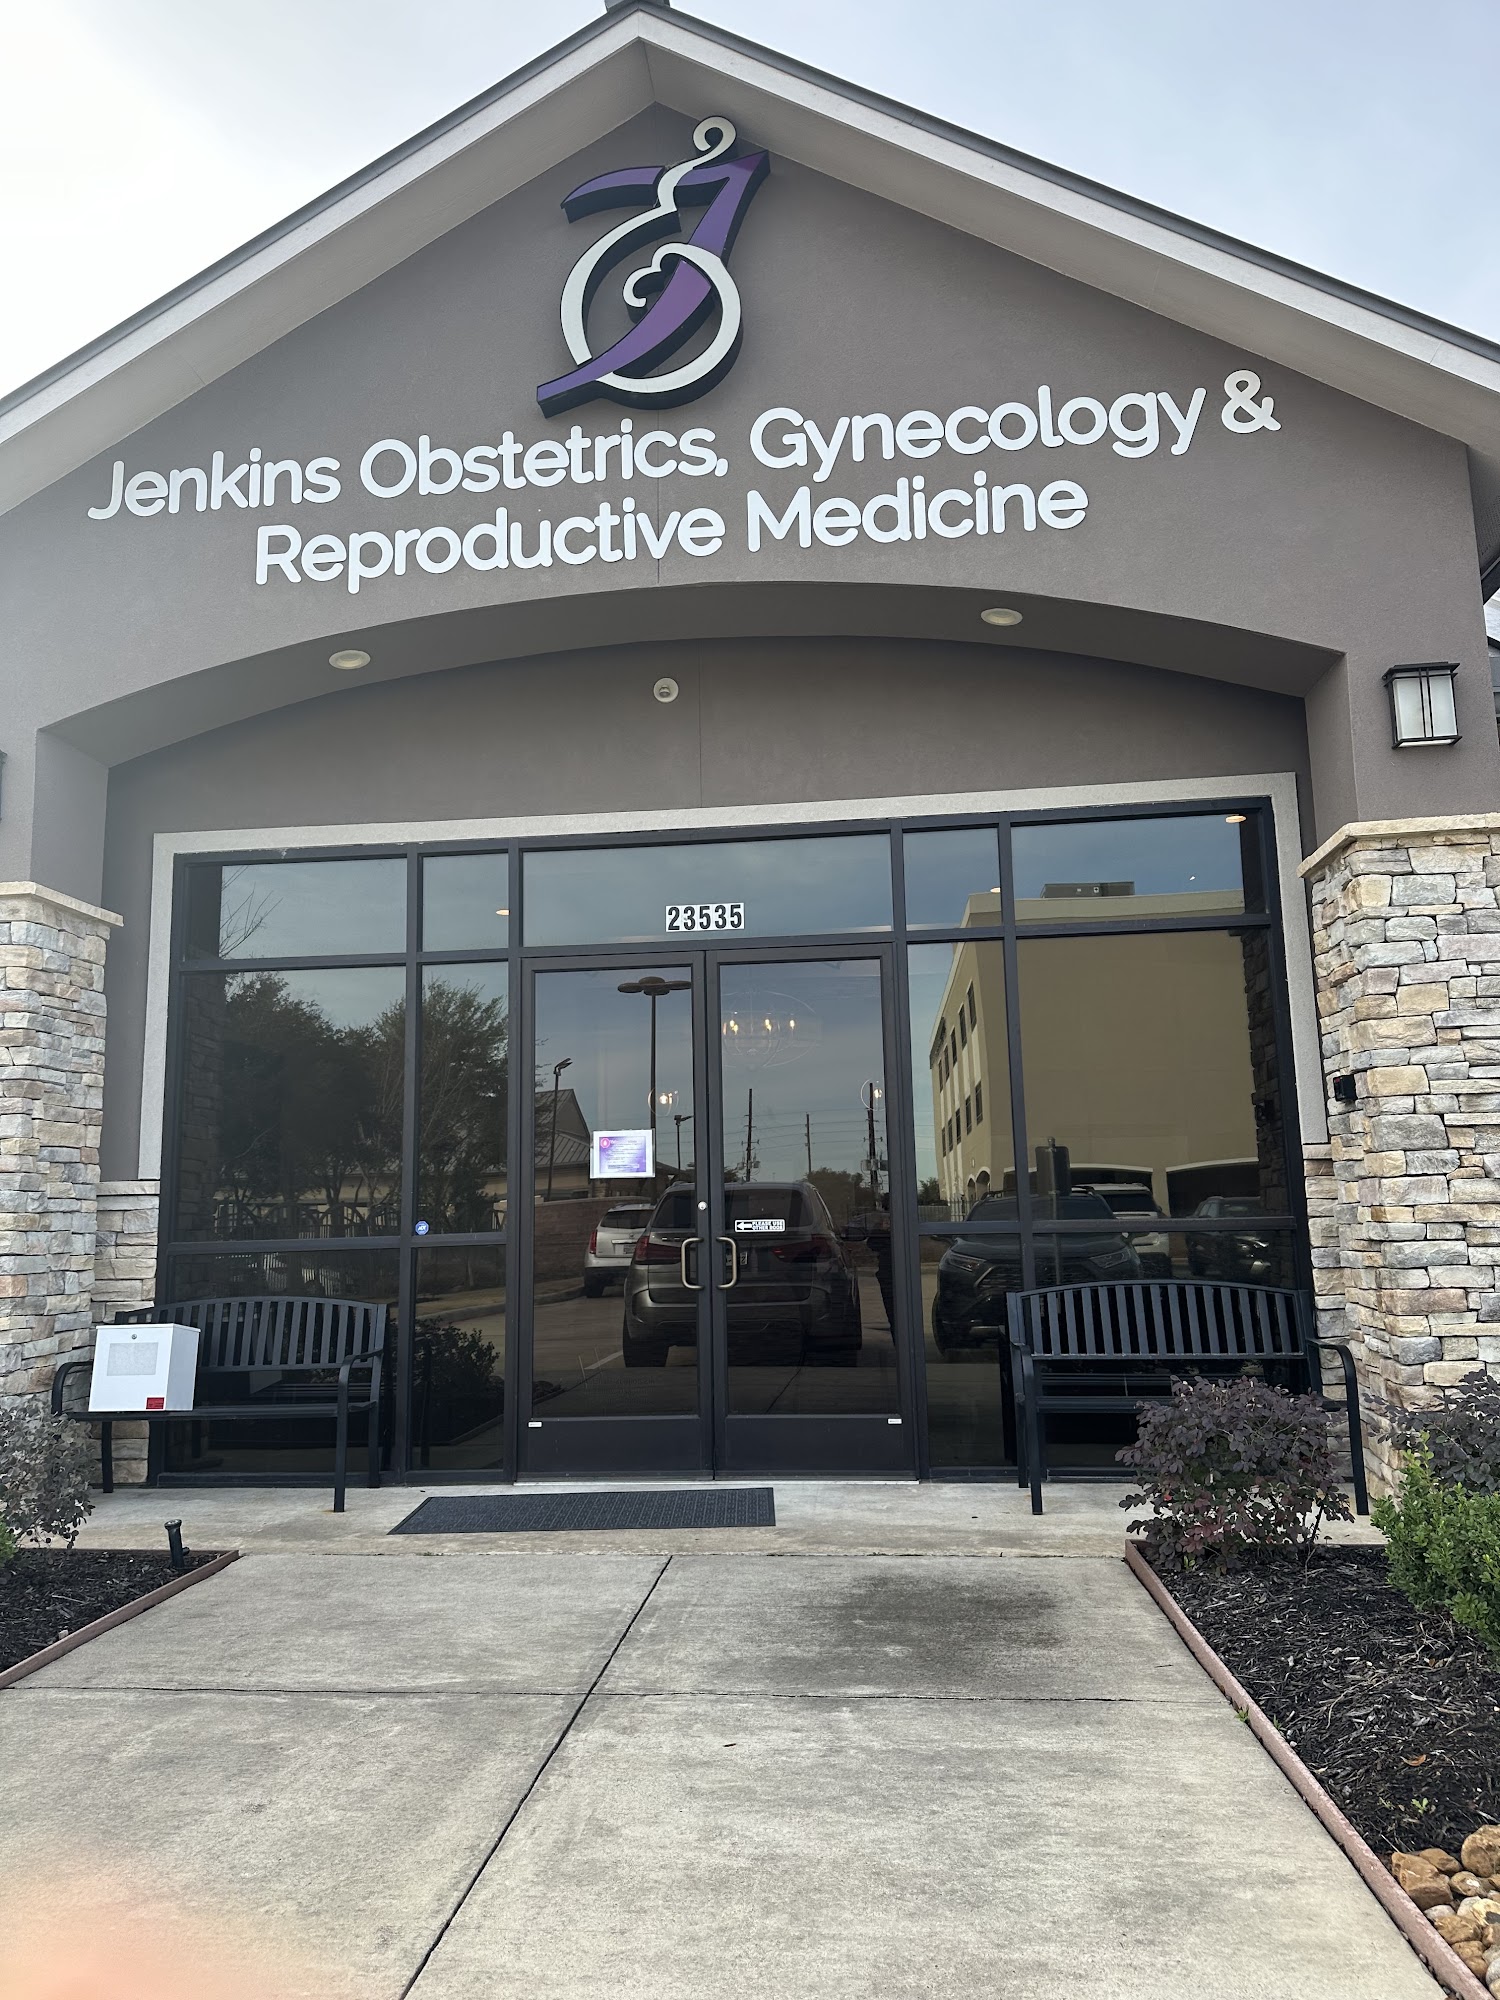 Jenkins Obstetrics, Gynecology & Reproductive Medicine